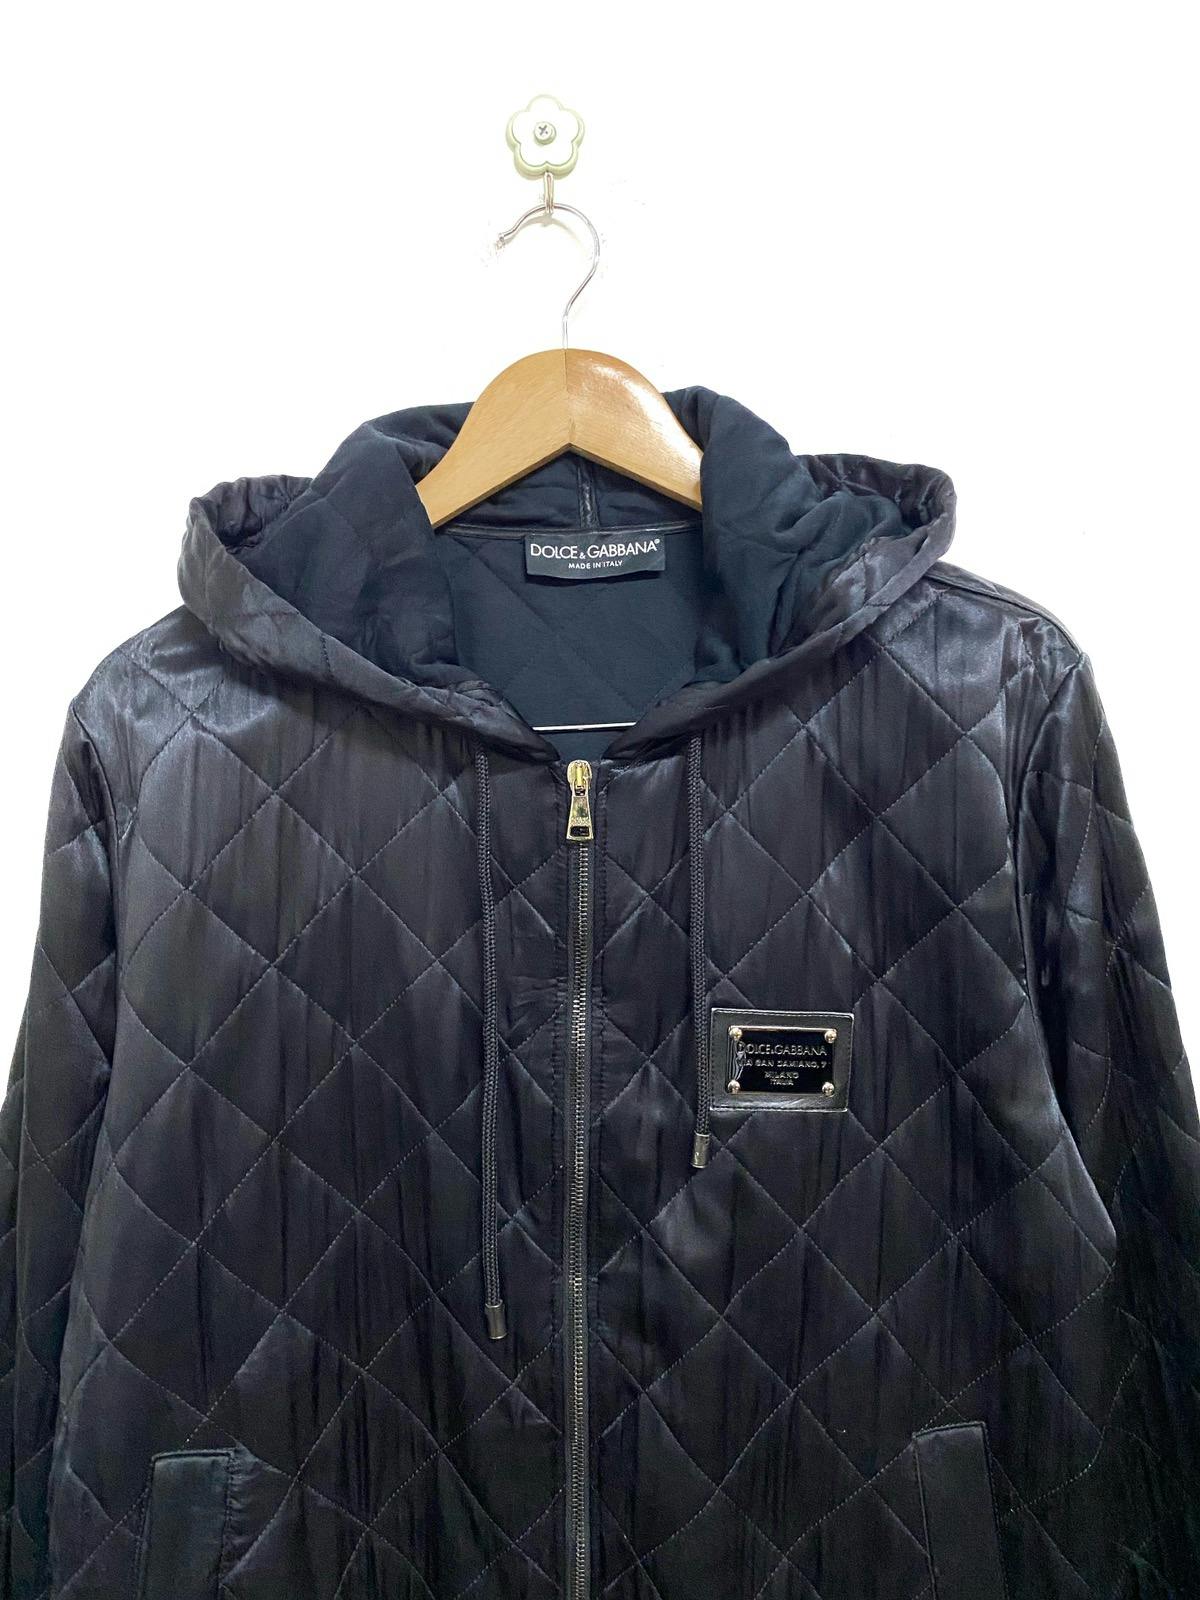 Dolce & Gabbana D&G Black Quilted Zipper Hoodie Jacket - 3